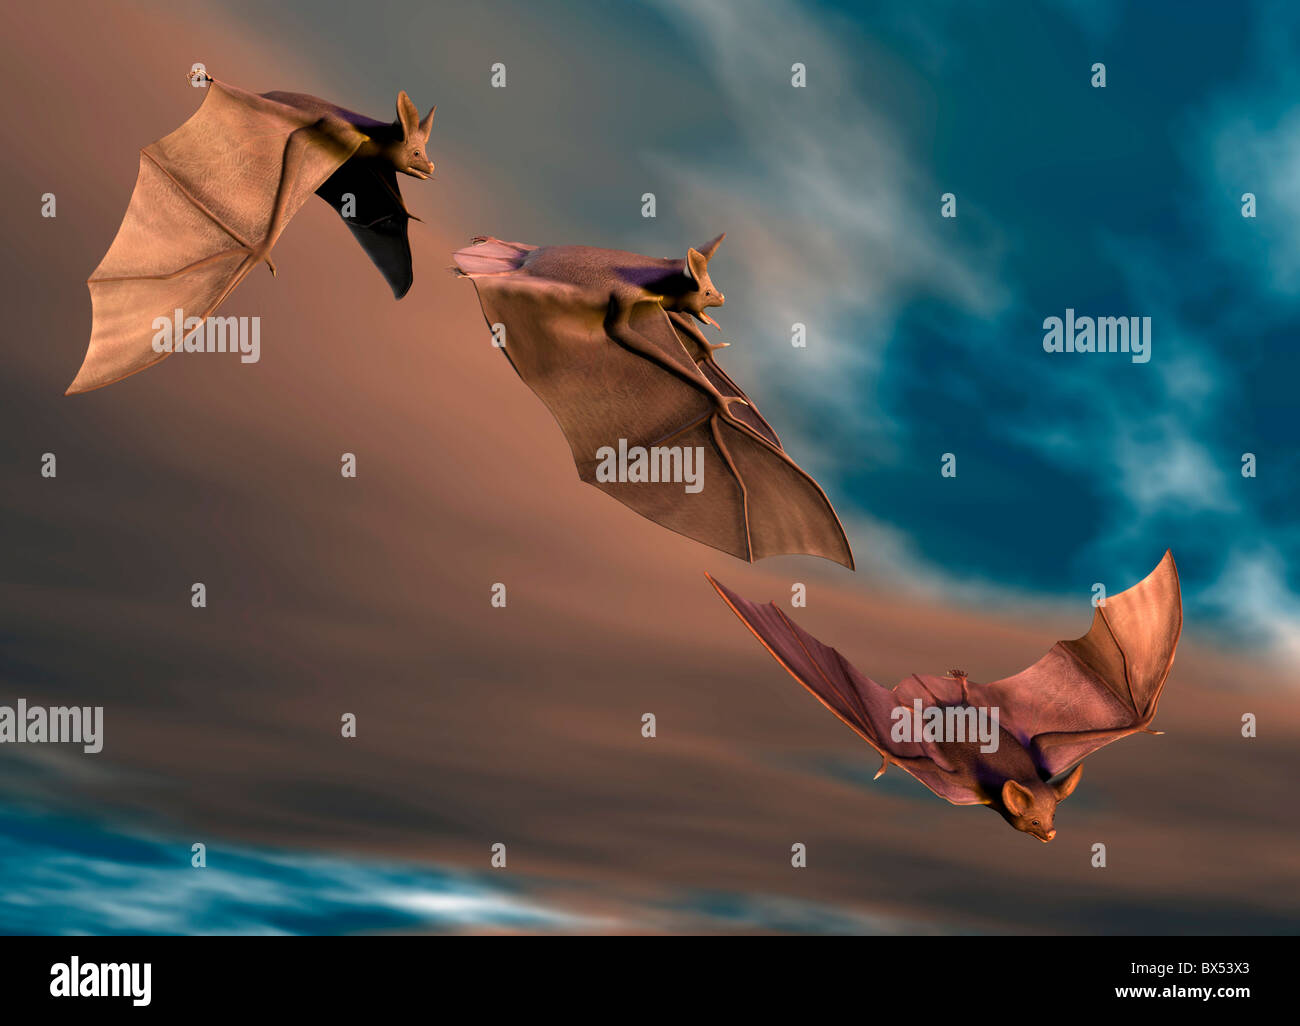 Bats in flight, artwork Stock Photo